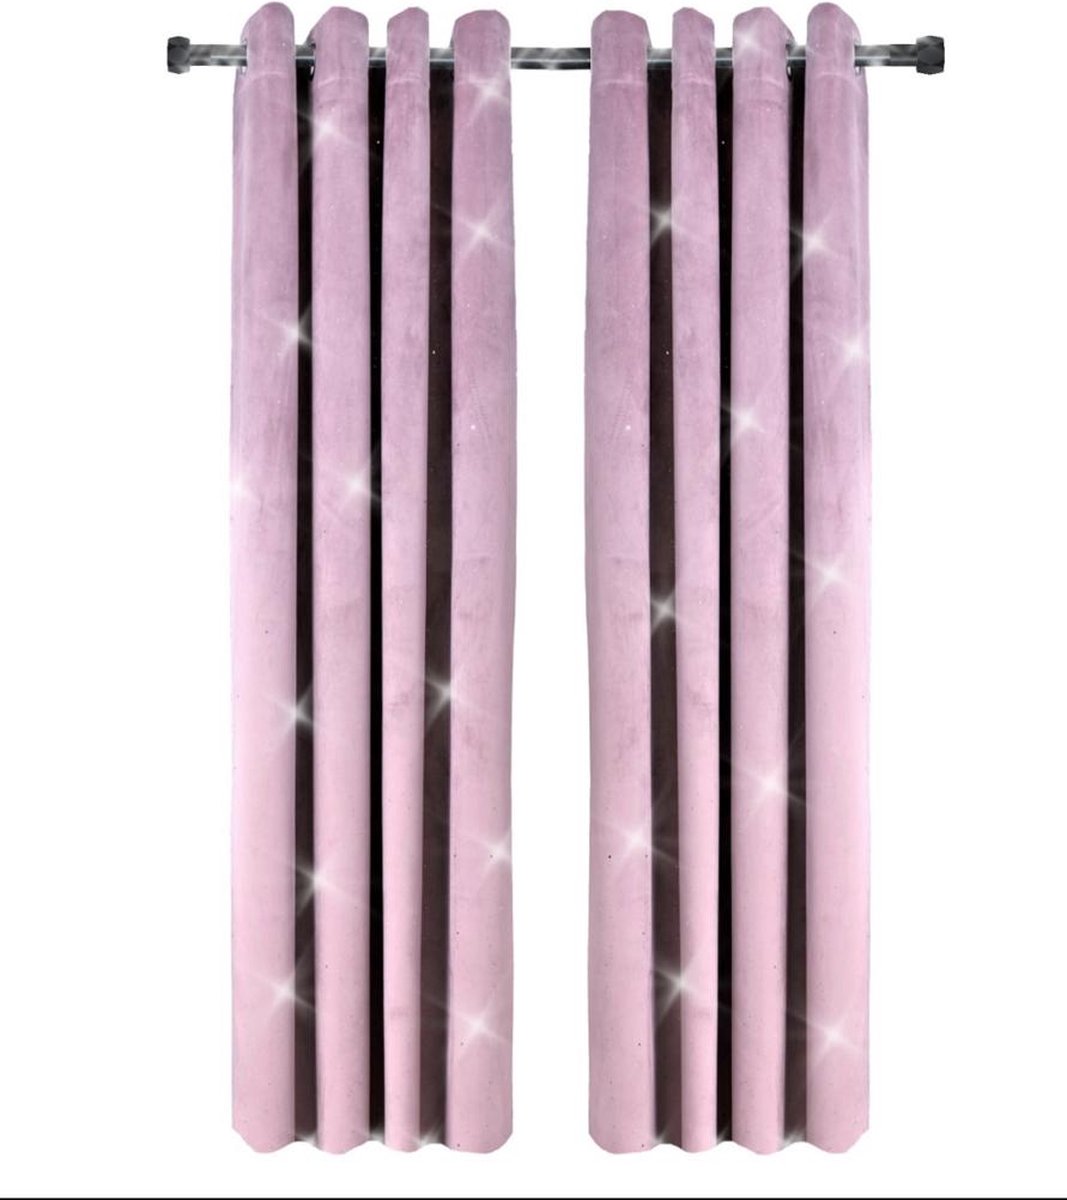 Glow Thuis -Kant en klaar gordijnen - verduisterend - Roze kleur Curtains met gloed- 140x260cm - hoge kwaliteit fluweel